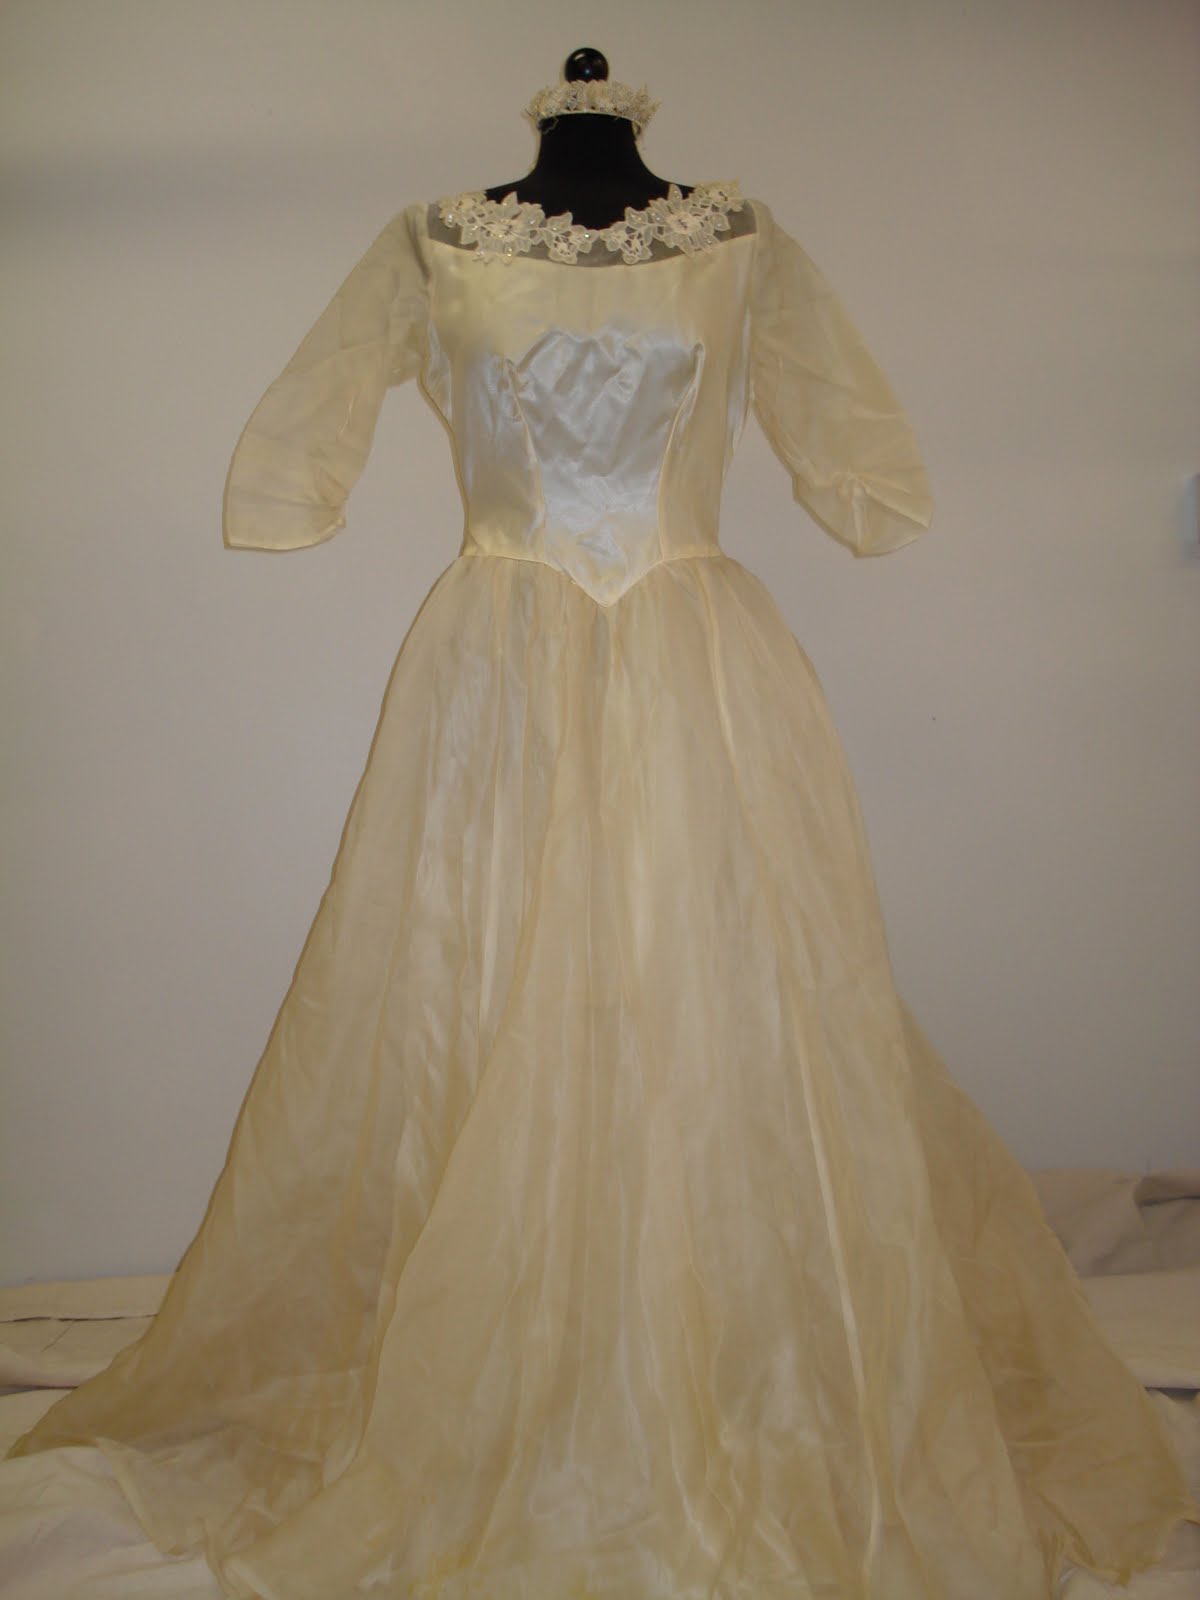 wedding dress sequins turned yellow